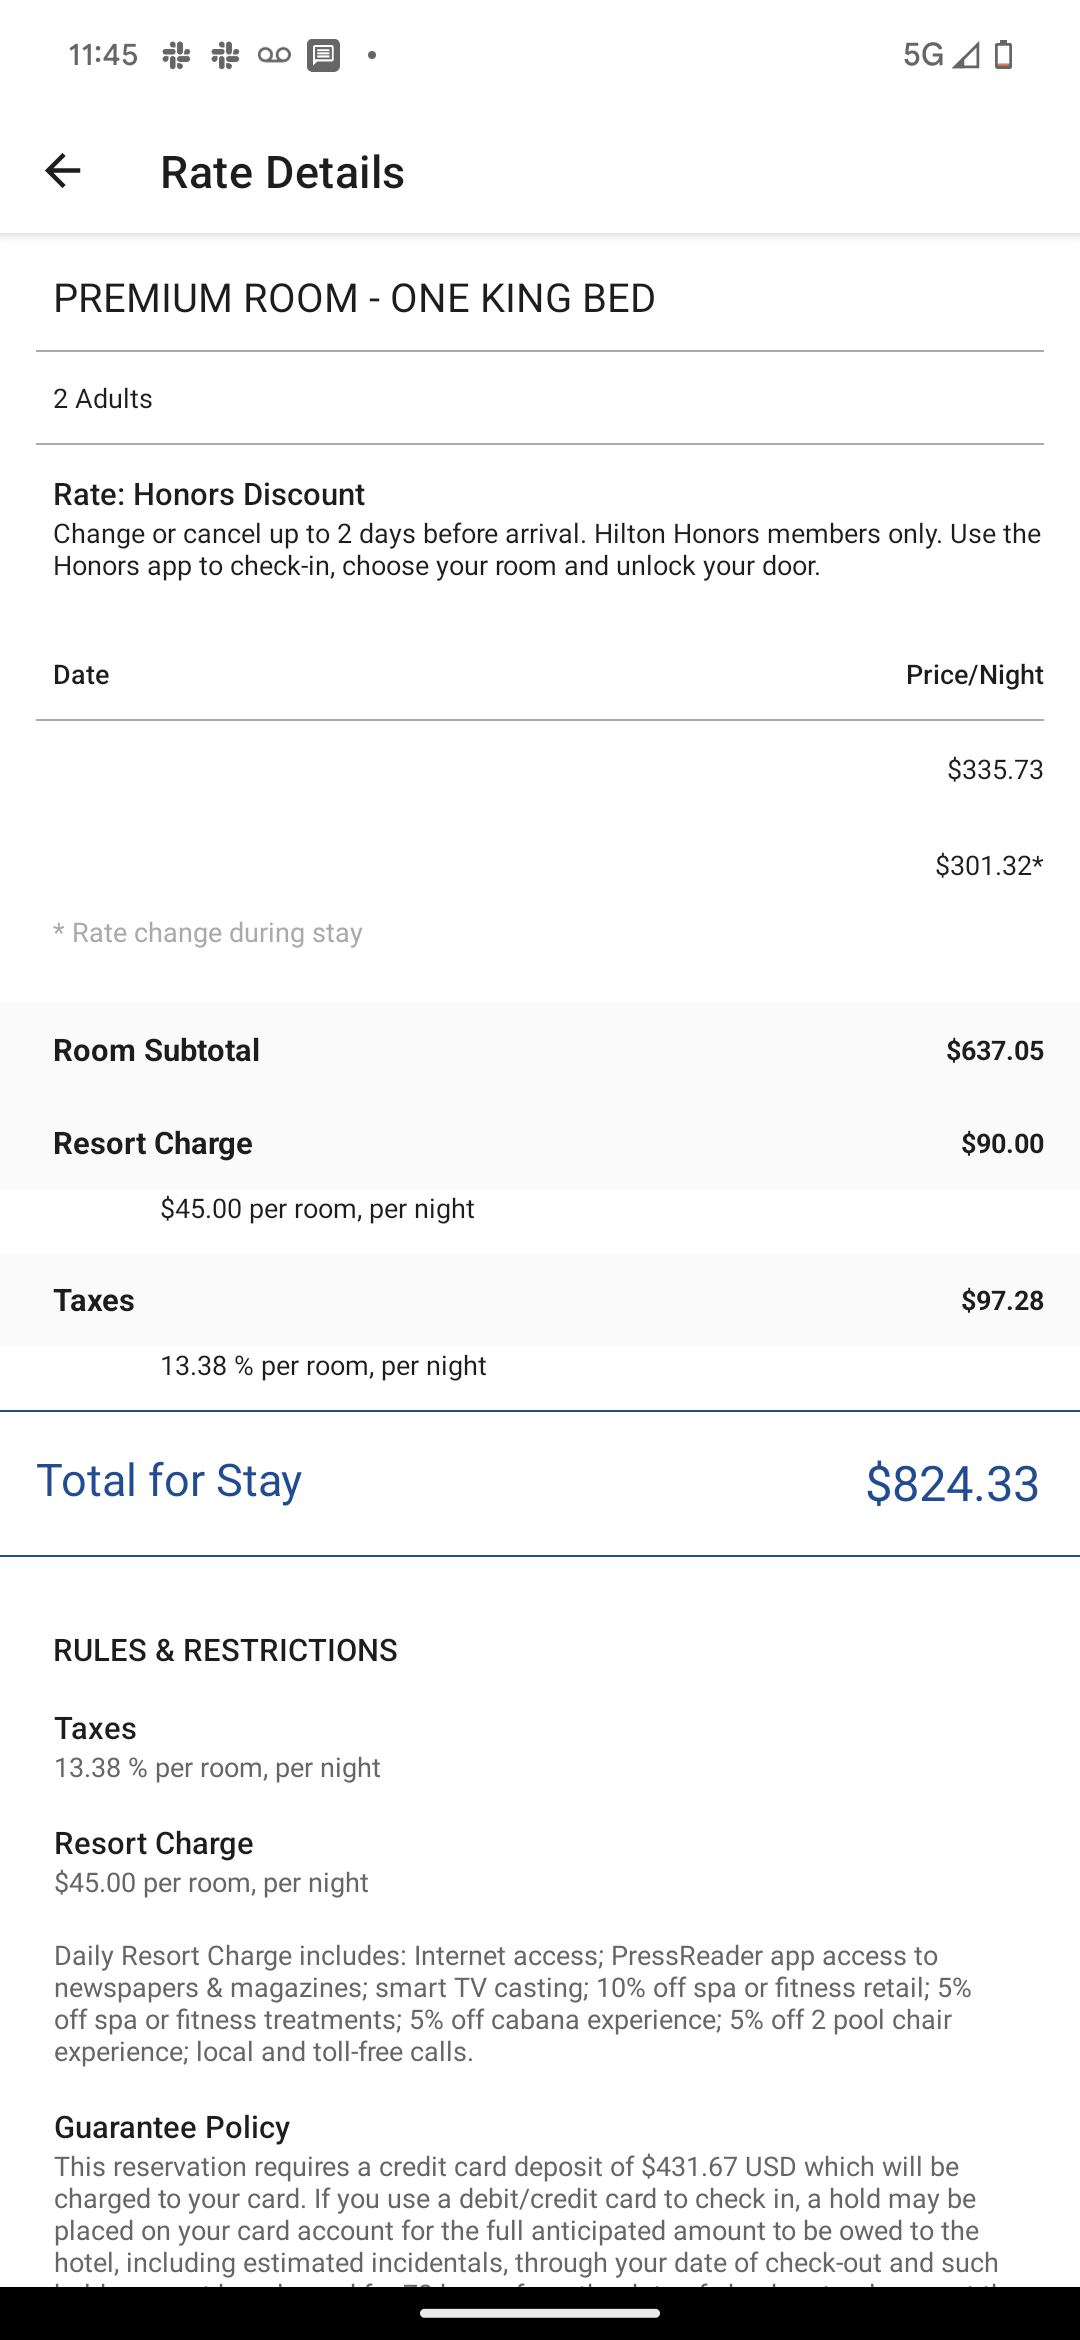 a screenshot of a hotel bill